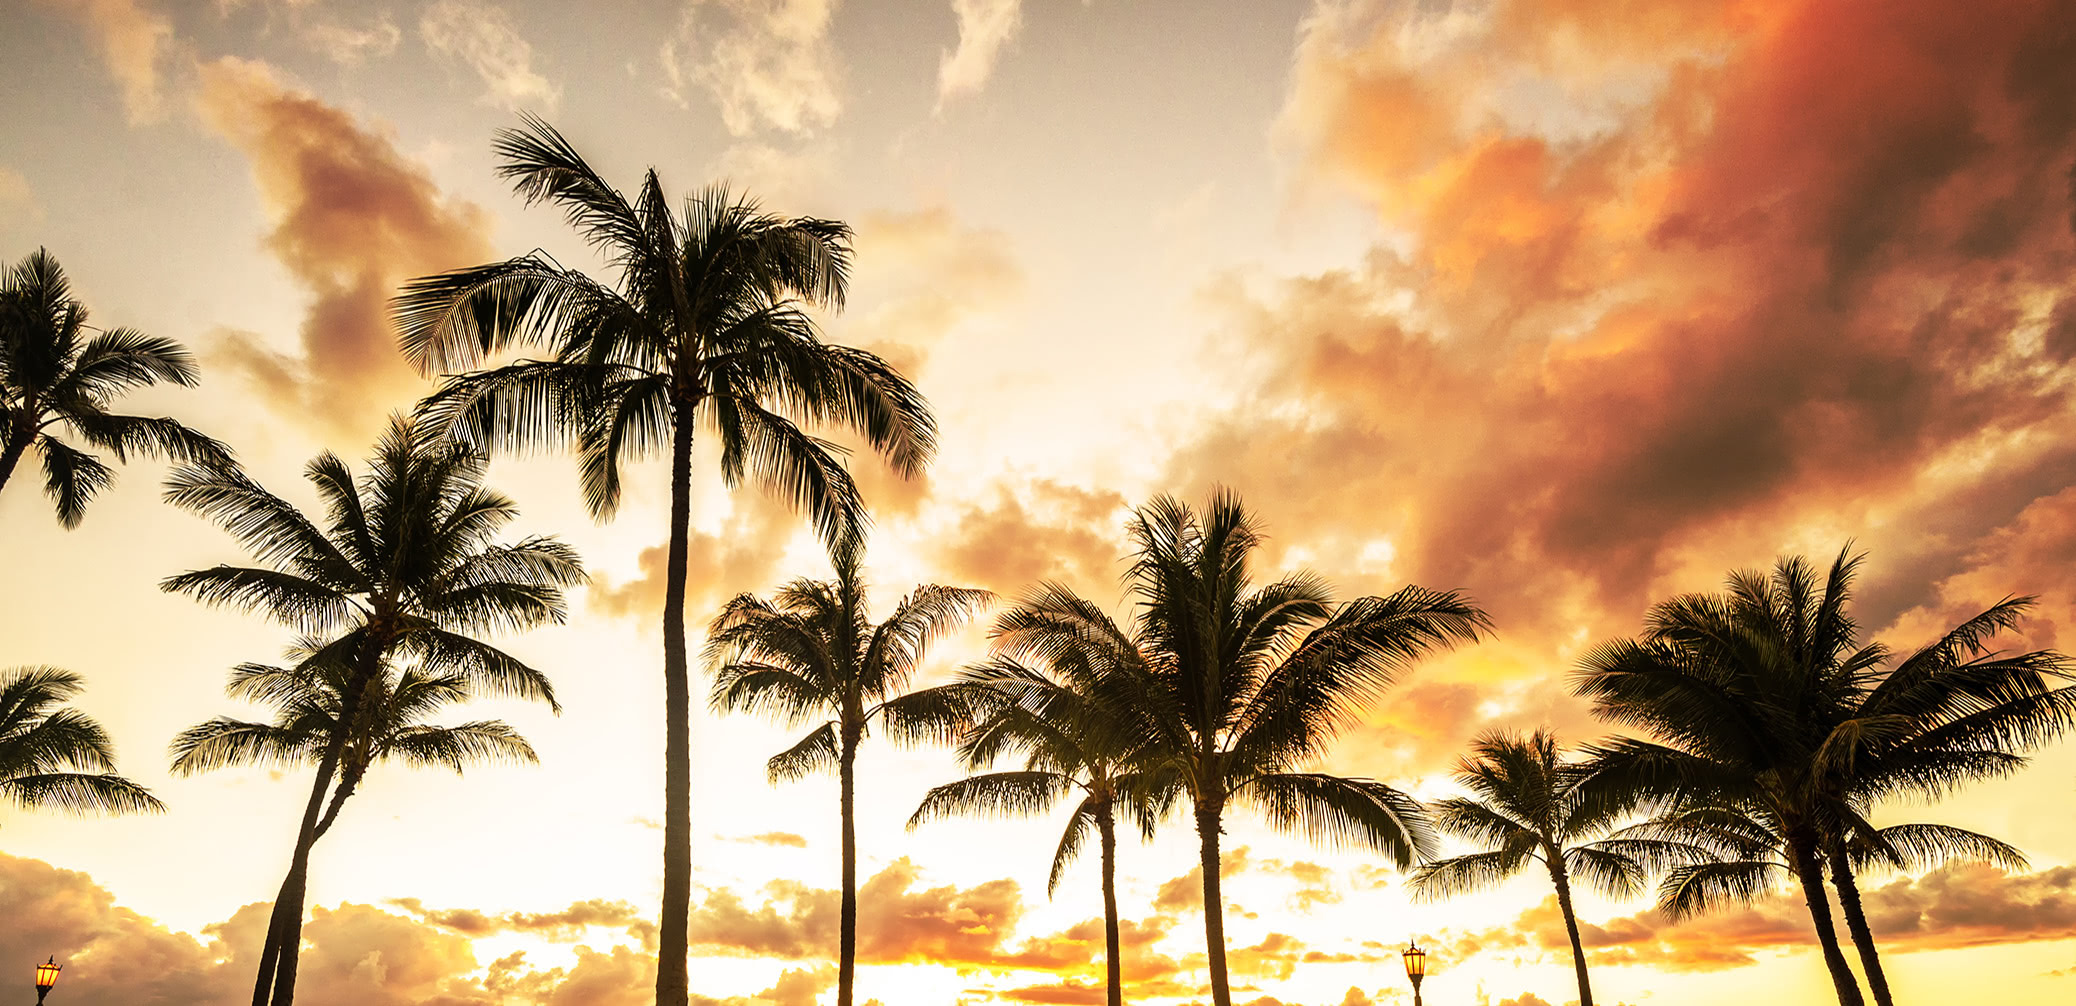 Sheraton Waikiki Or Hilton Hawaiian Village. Which Should You Book?